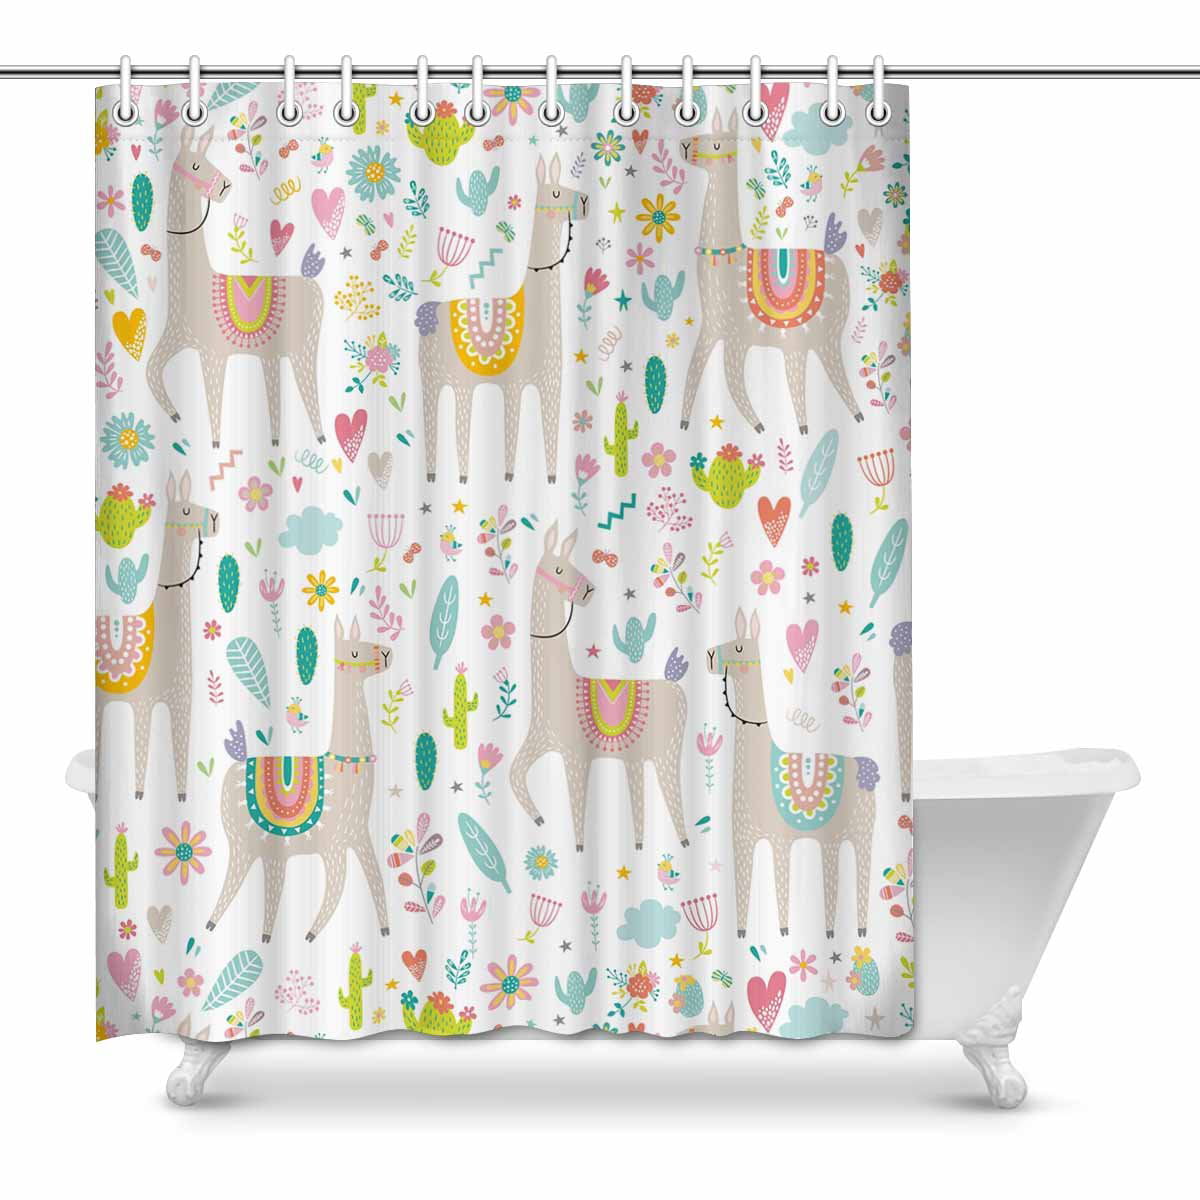 Details about   Pink Alpaca Flowers Cactus Wood Planks Fabric Shower Curtain Set Bathroom Decor 